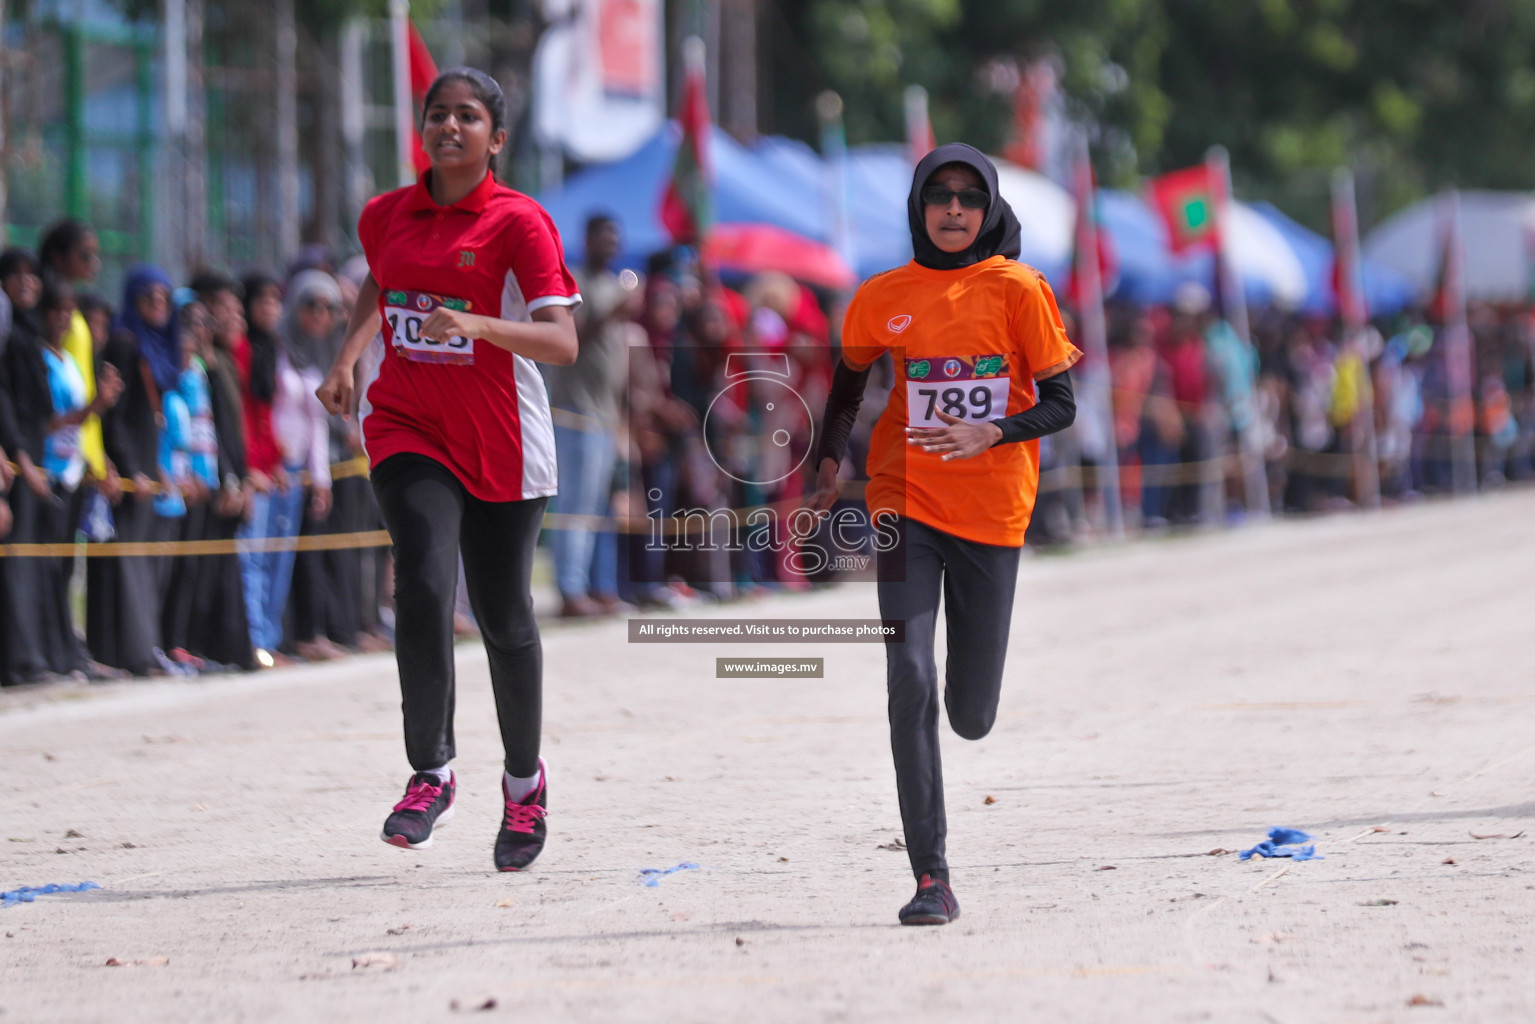 22nd Inter school Athletics Championship 2019 (Day 1) held in Male', Maldives on 04th August 2019 Photos: Shuu Abdul Sattar